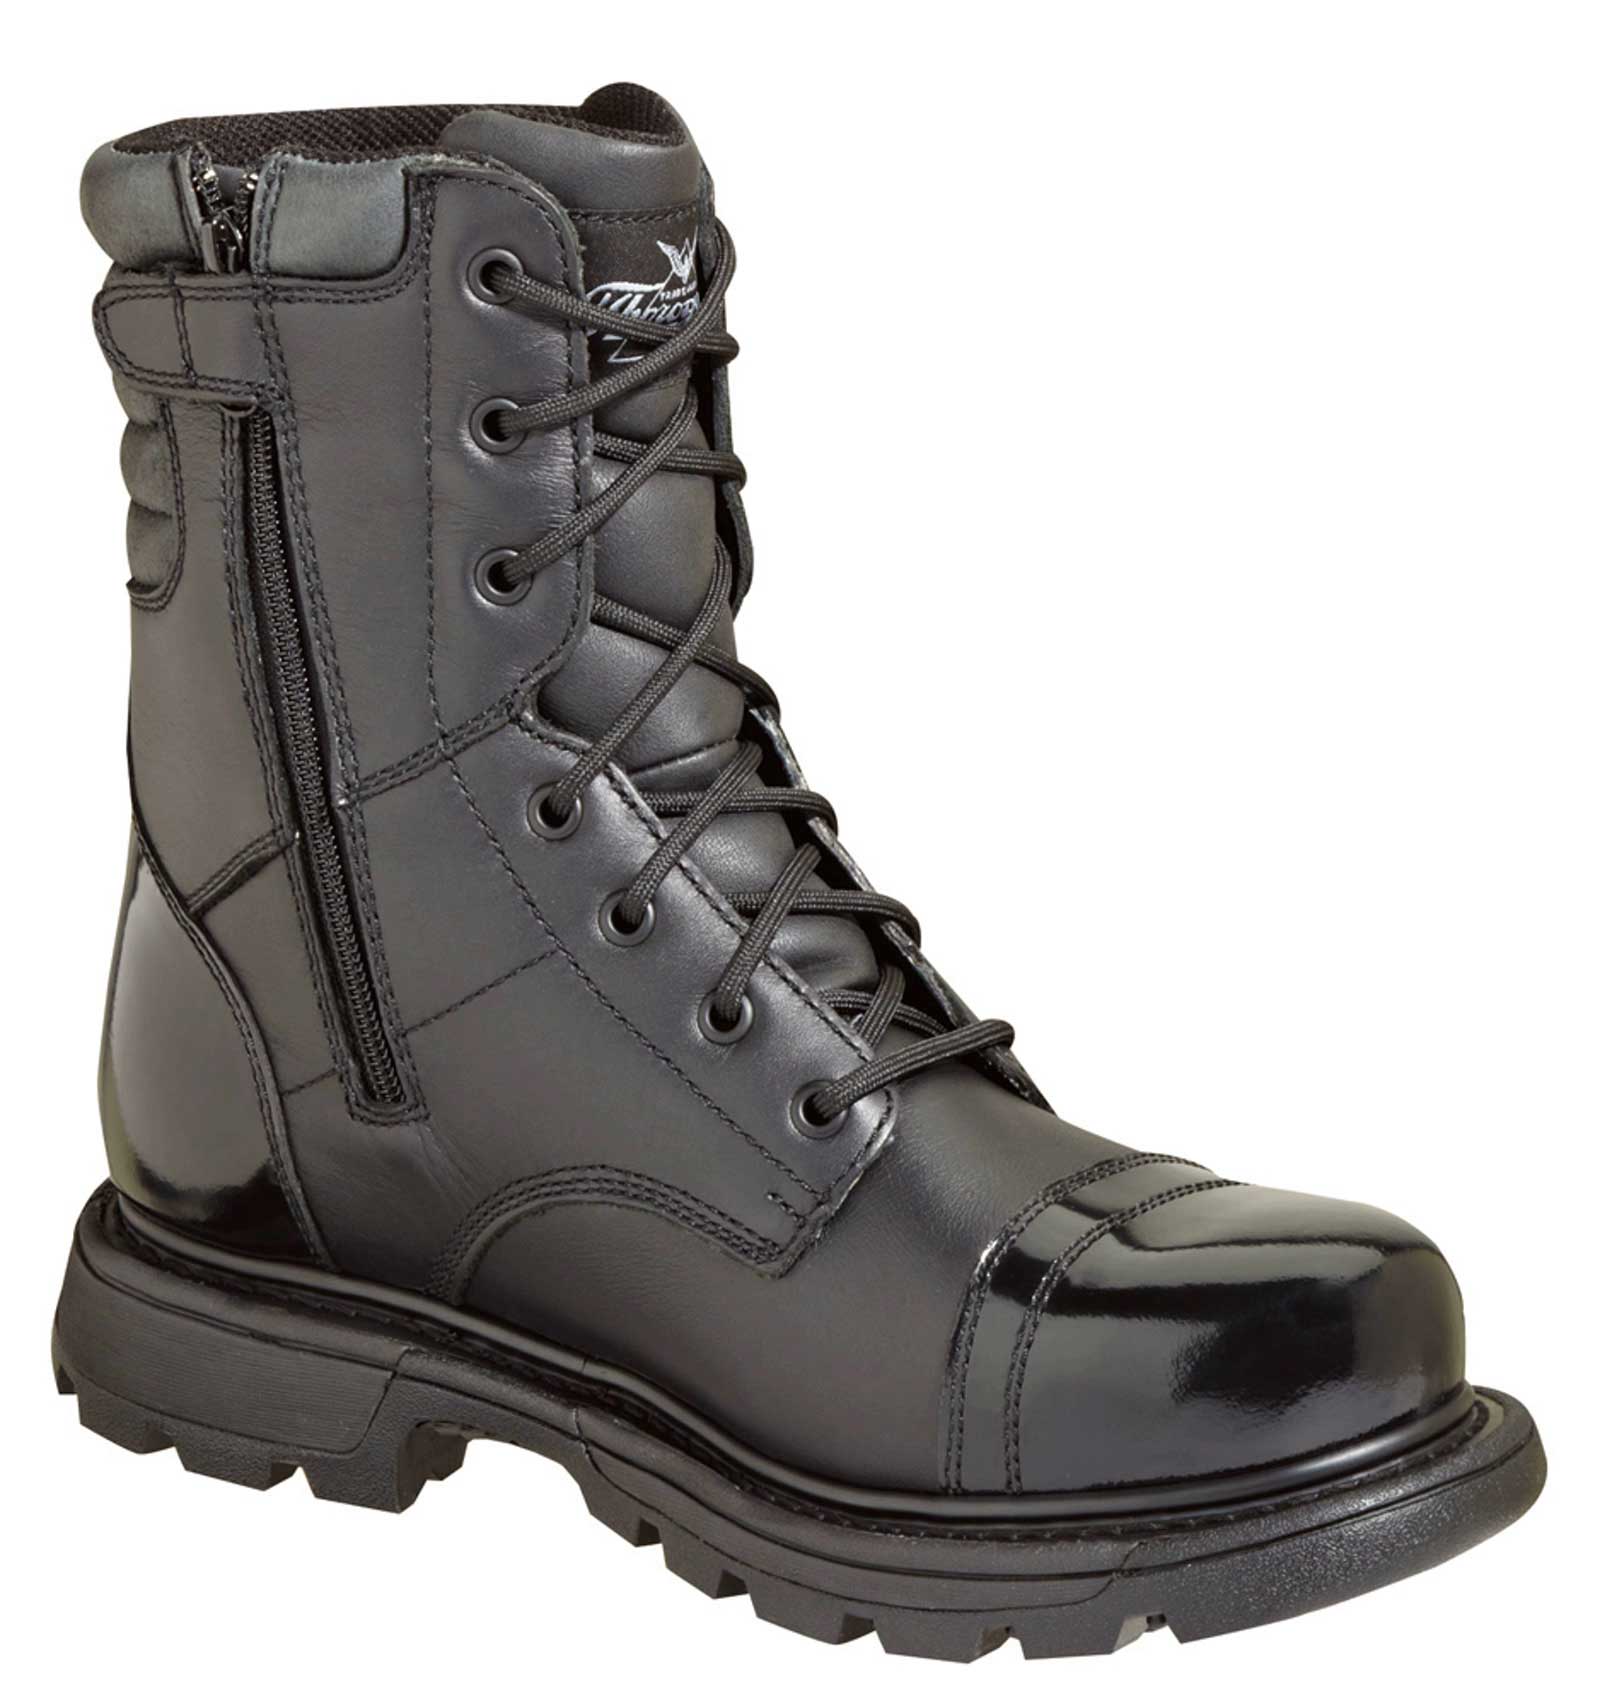 thorogood zipper work boots